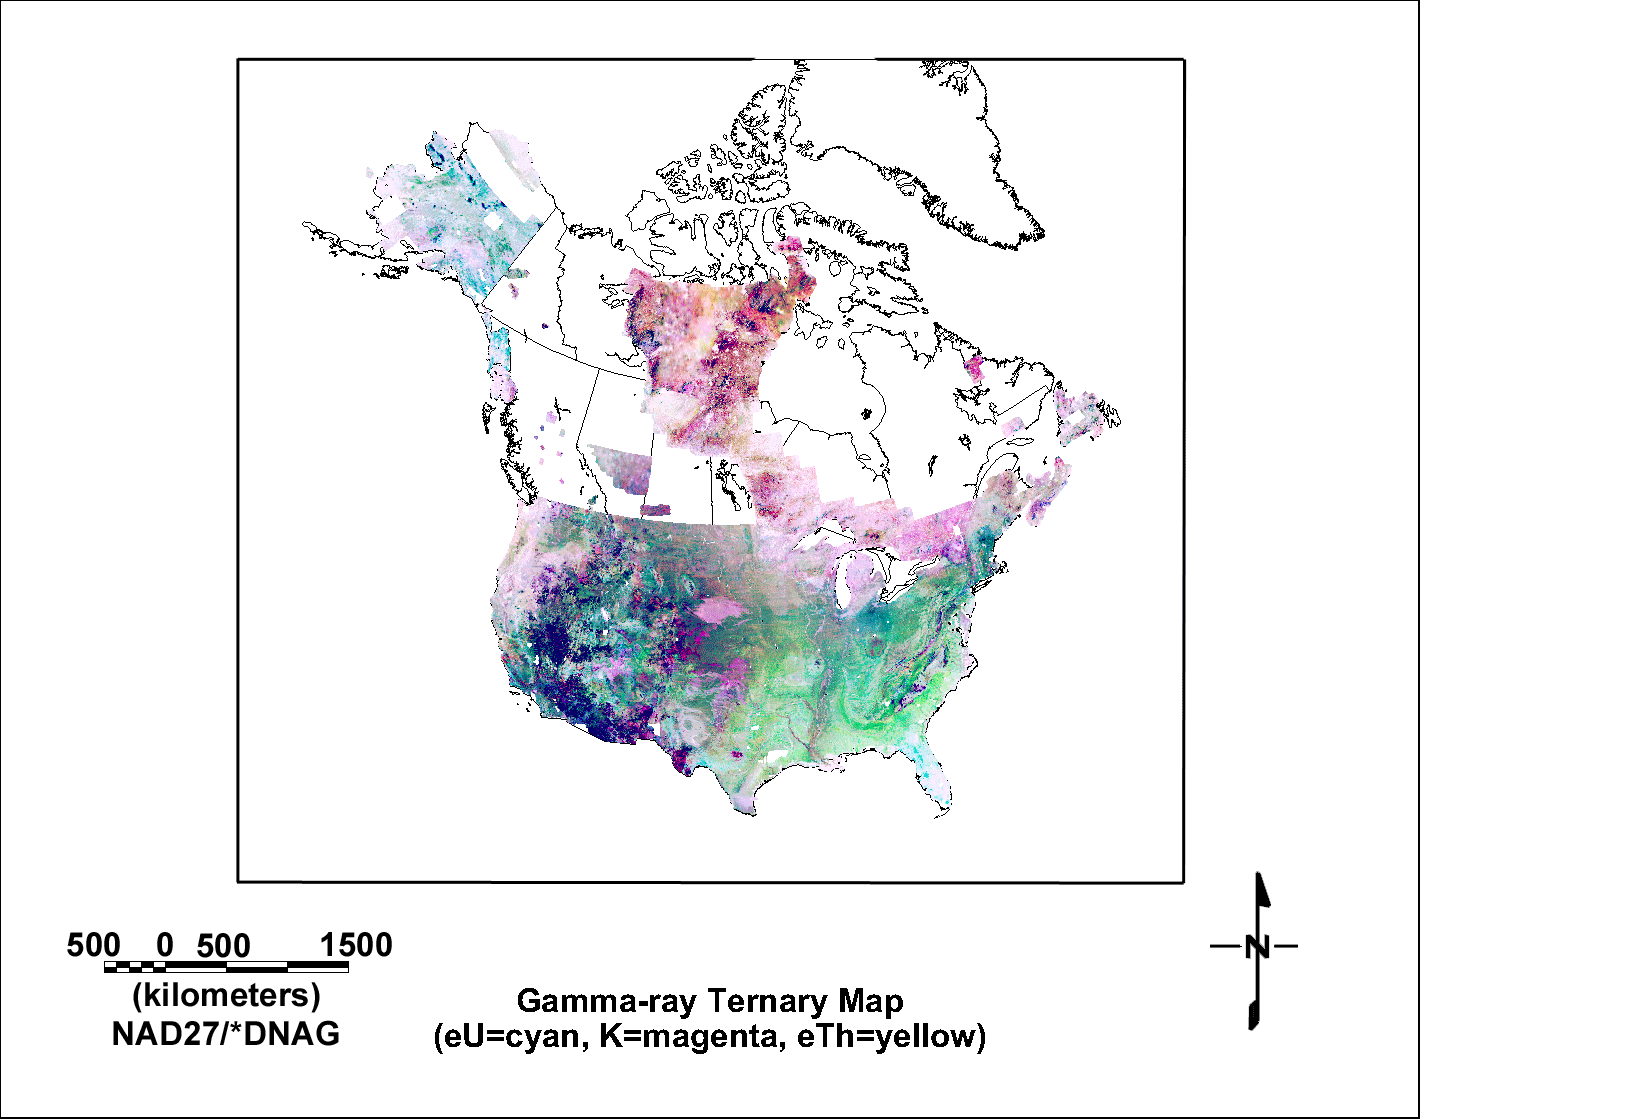 Image of ternary map of gamma-ray data.